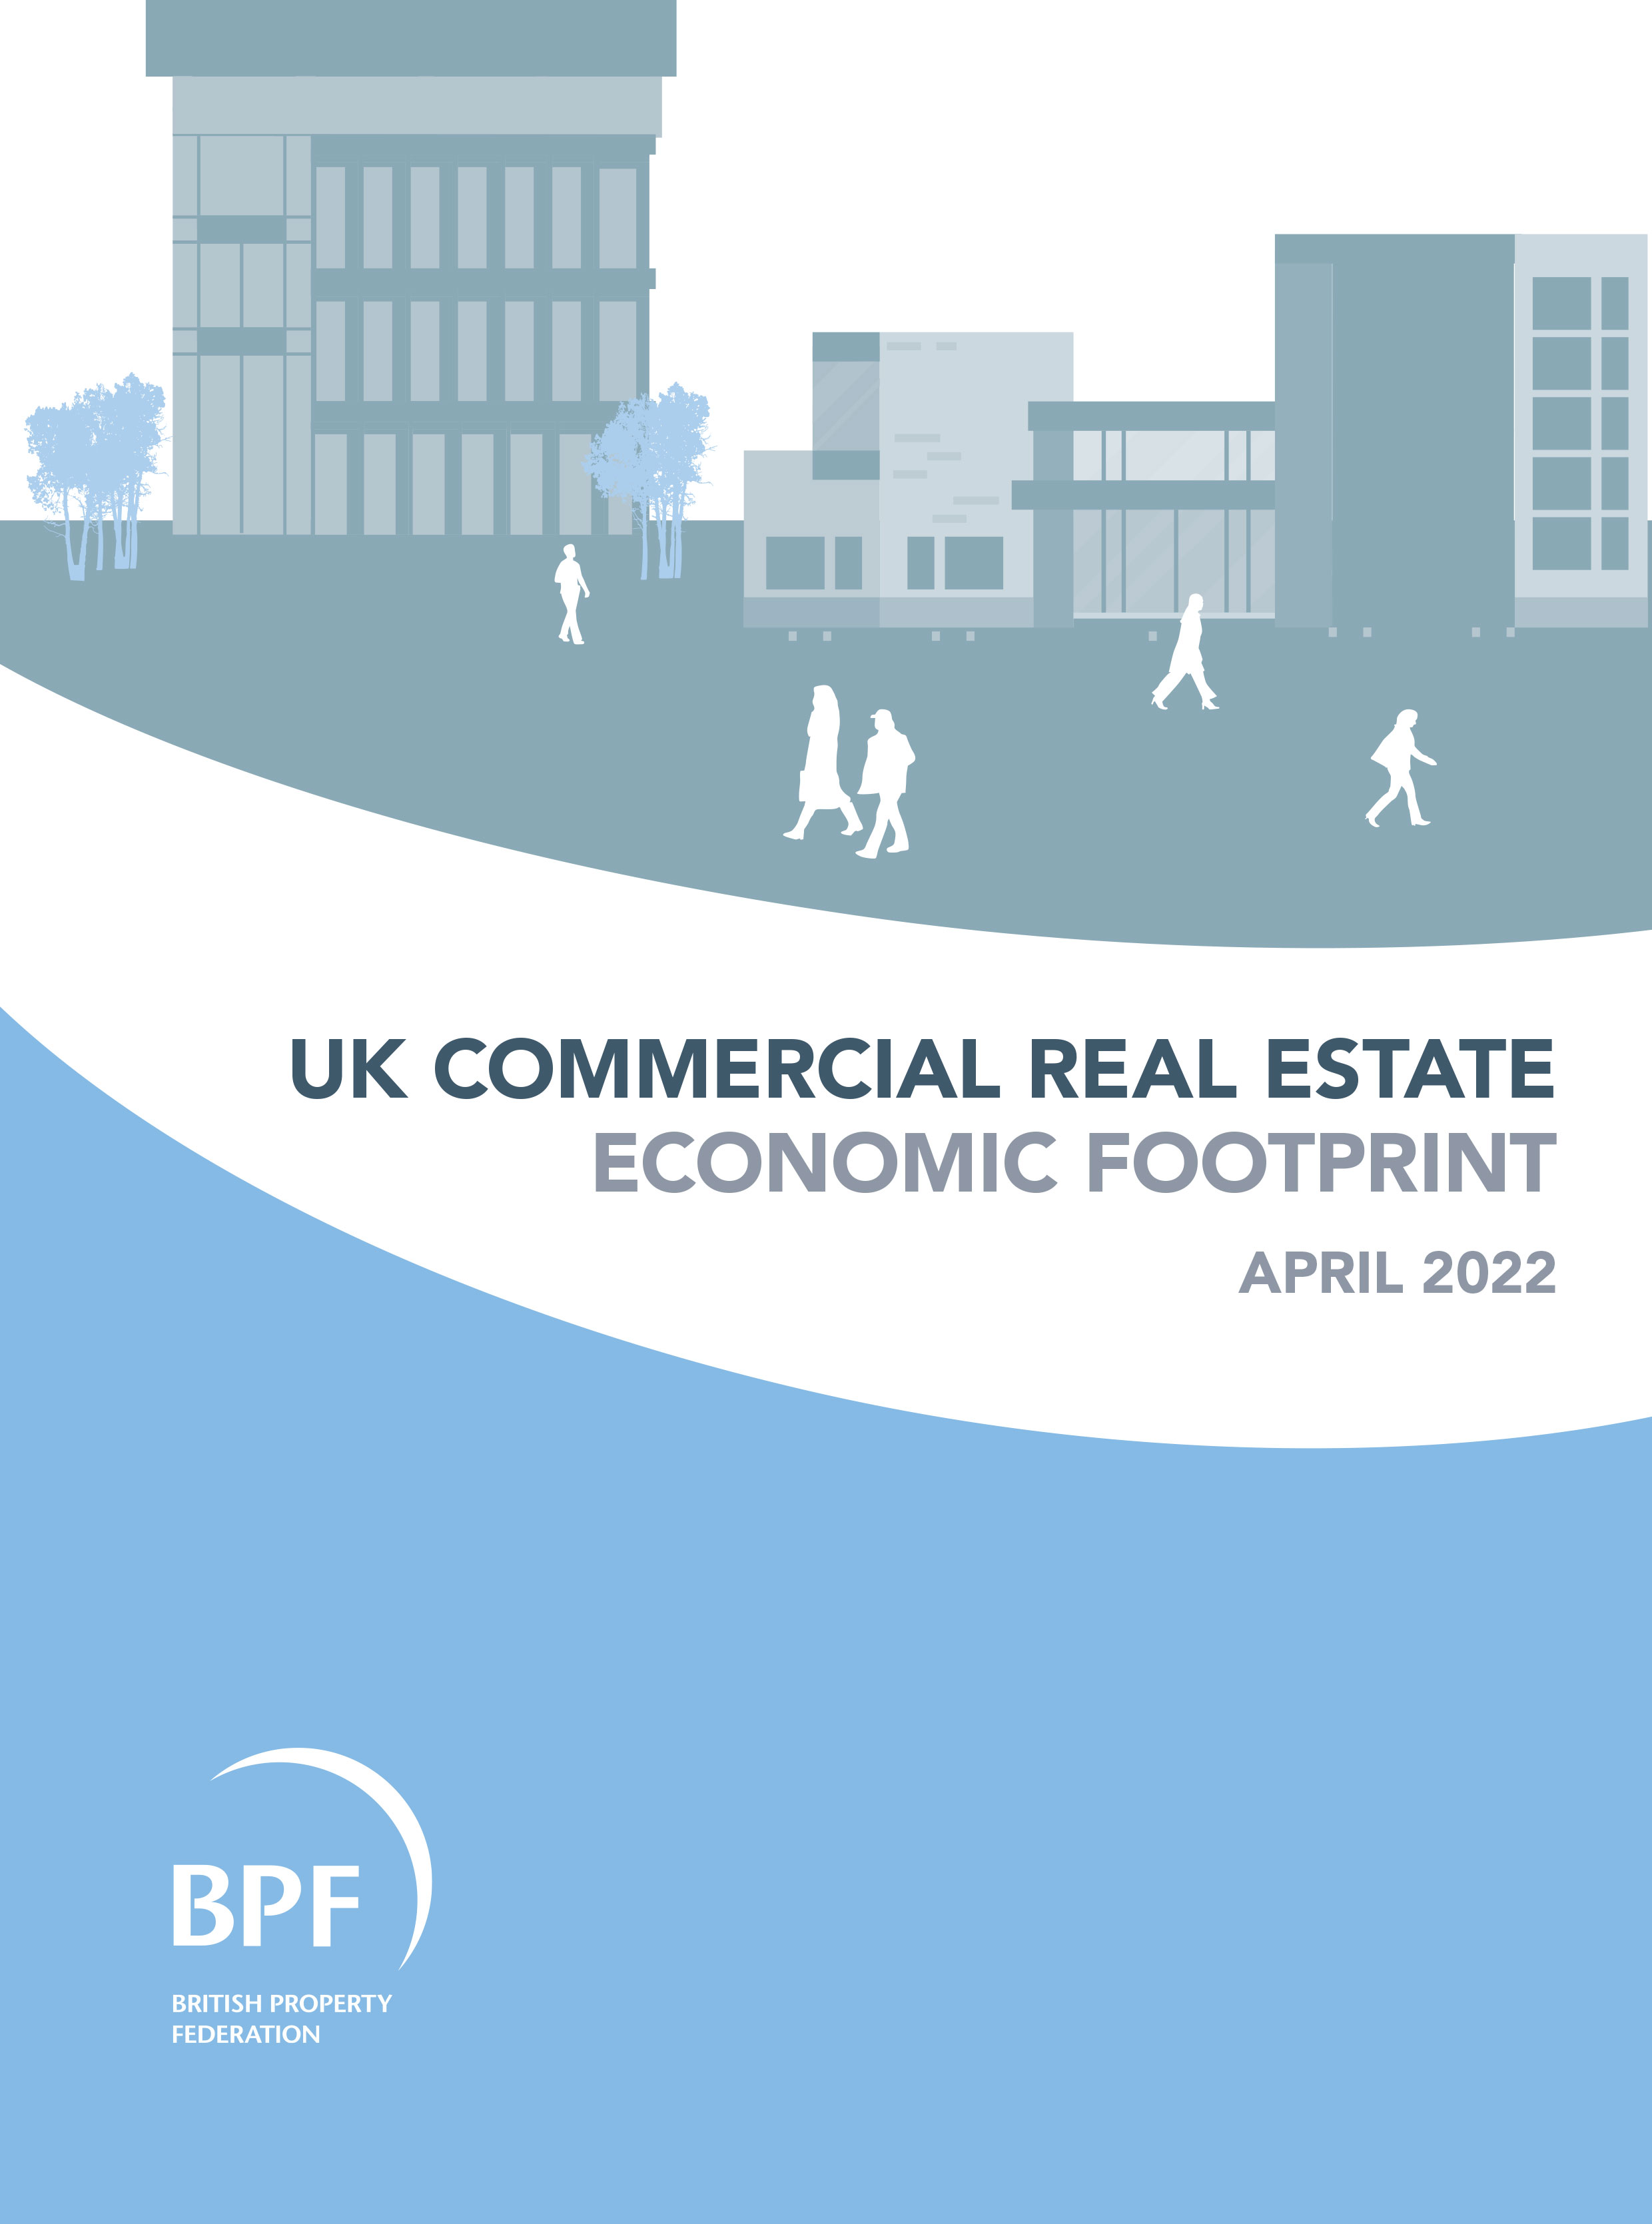 BPF Research UK Commercial Real Estate Economic Footprint April 2022.jpg